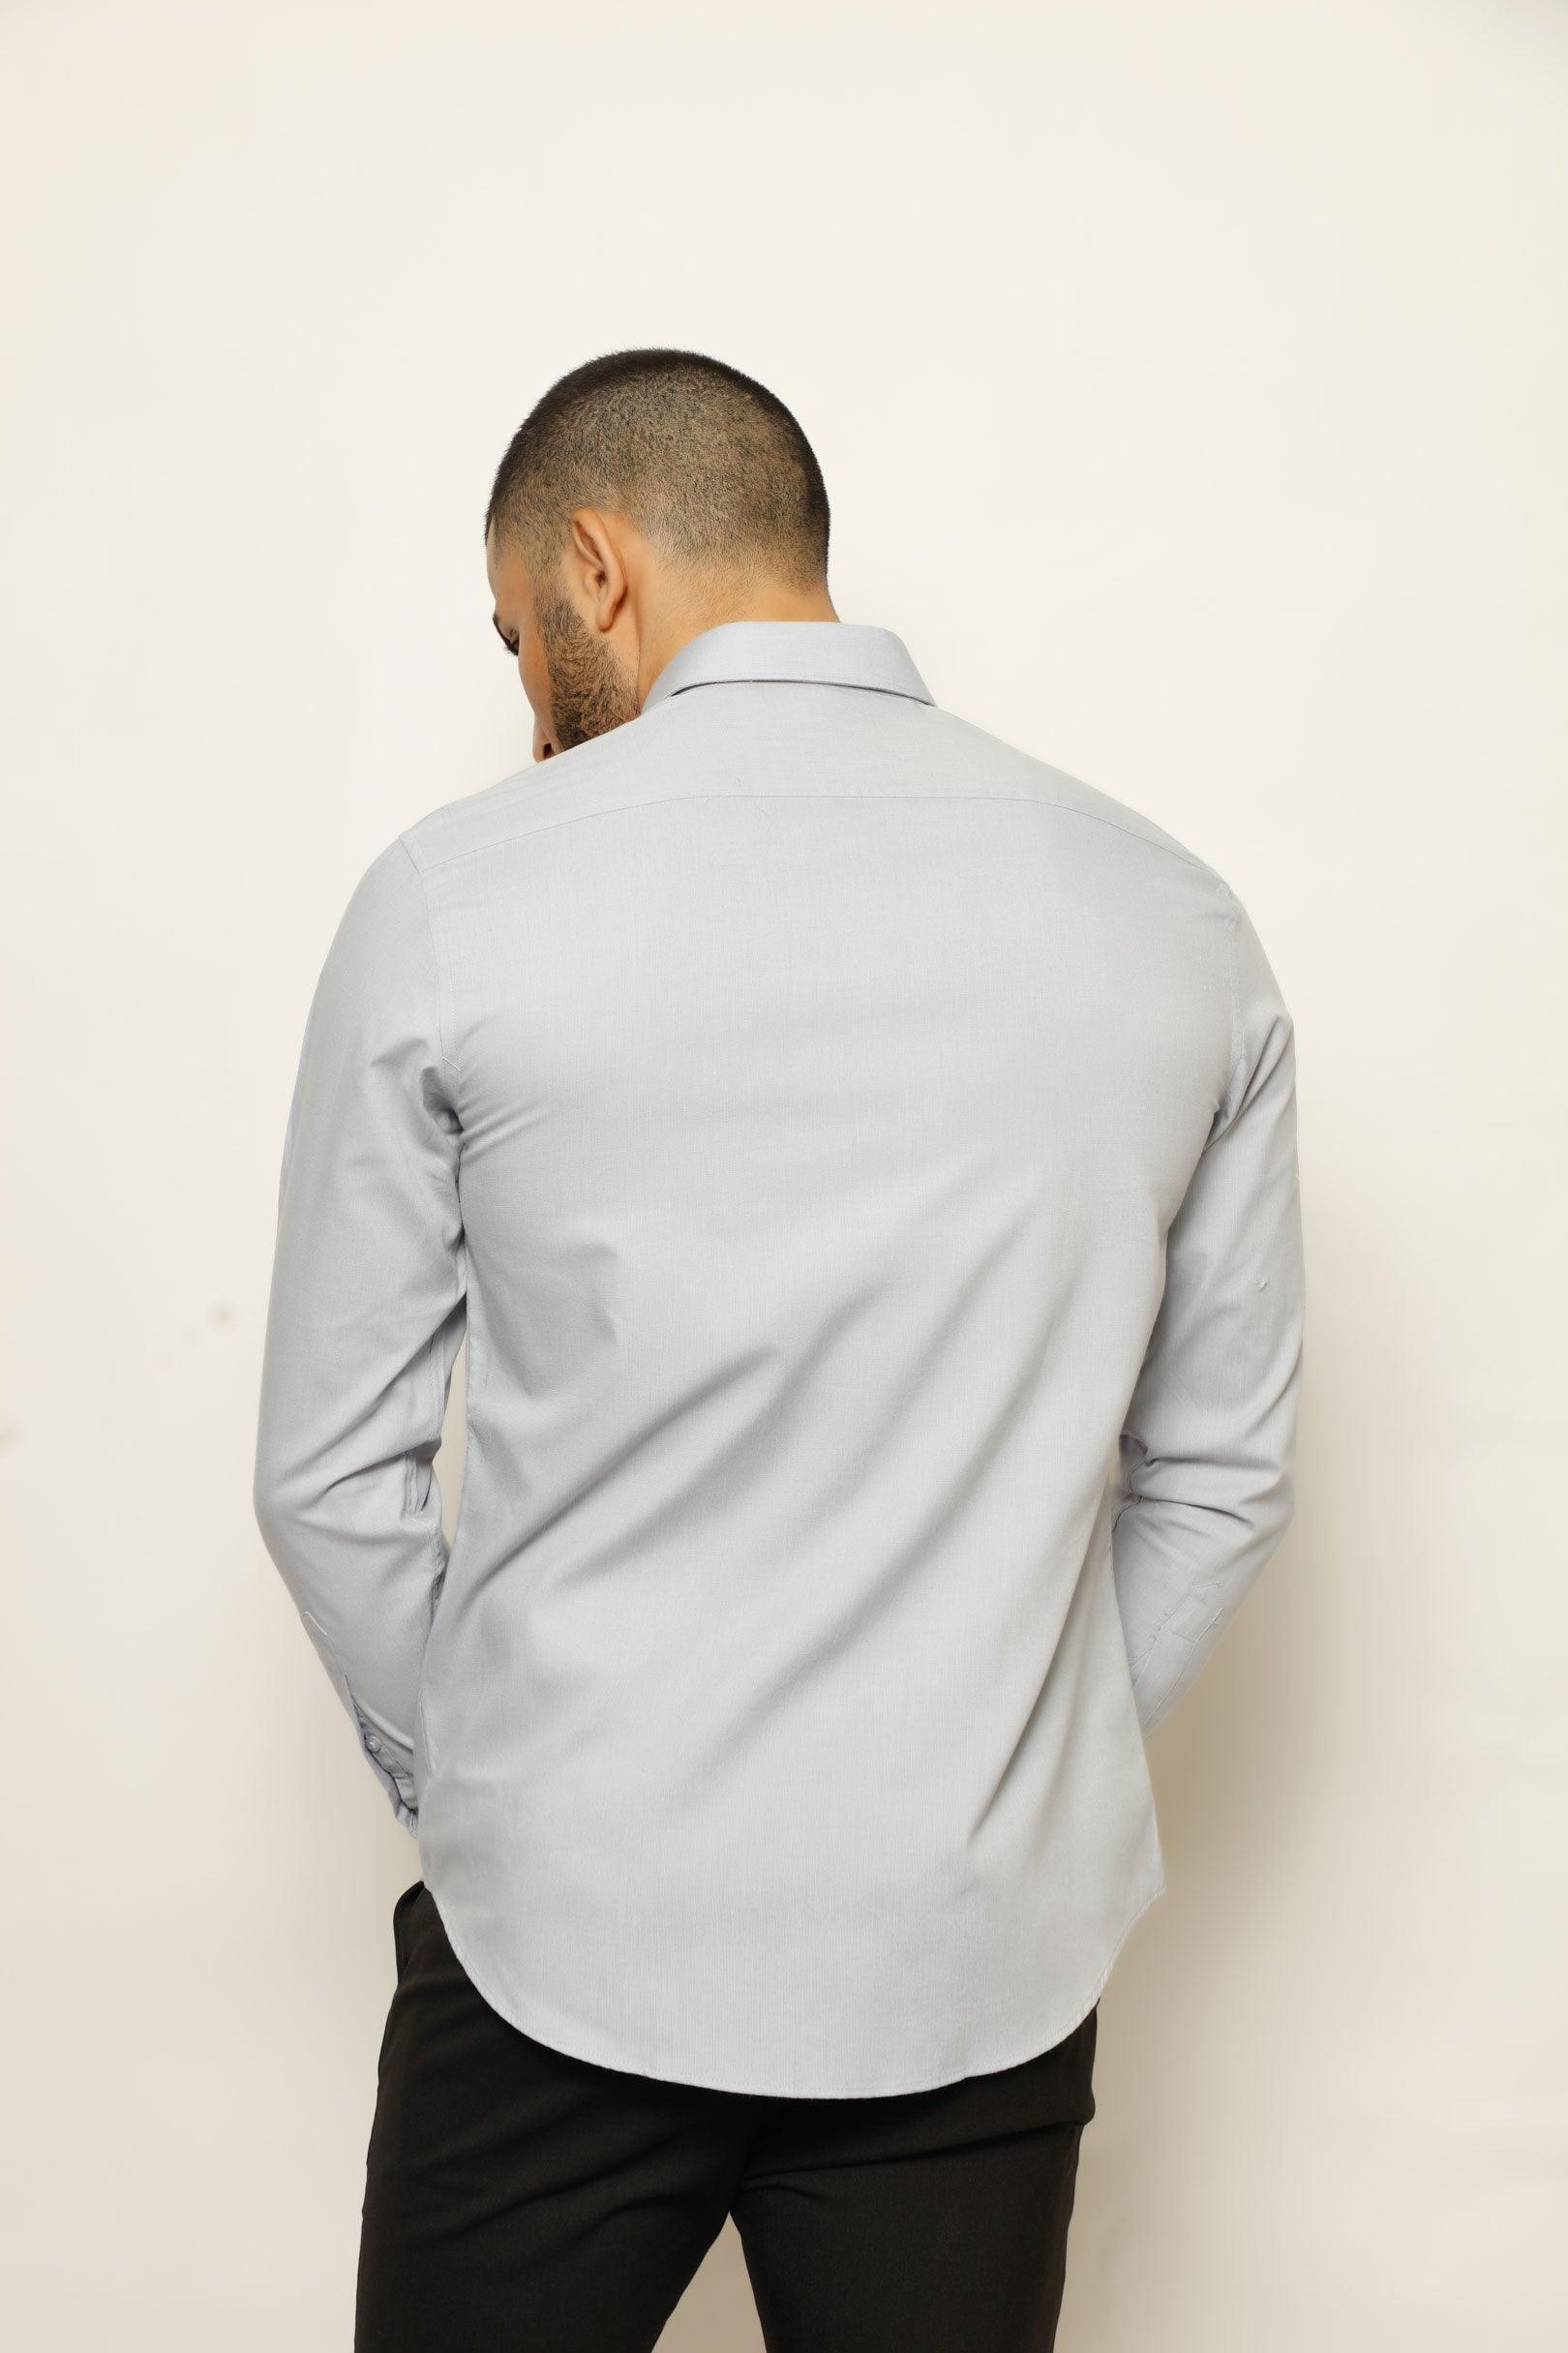 PERFINO URBAN CULTURE FORMALS, SHIRT, CORADO, light gray, longsleeve, men, shirt, top, coradomoda, coradomoda.com